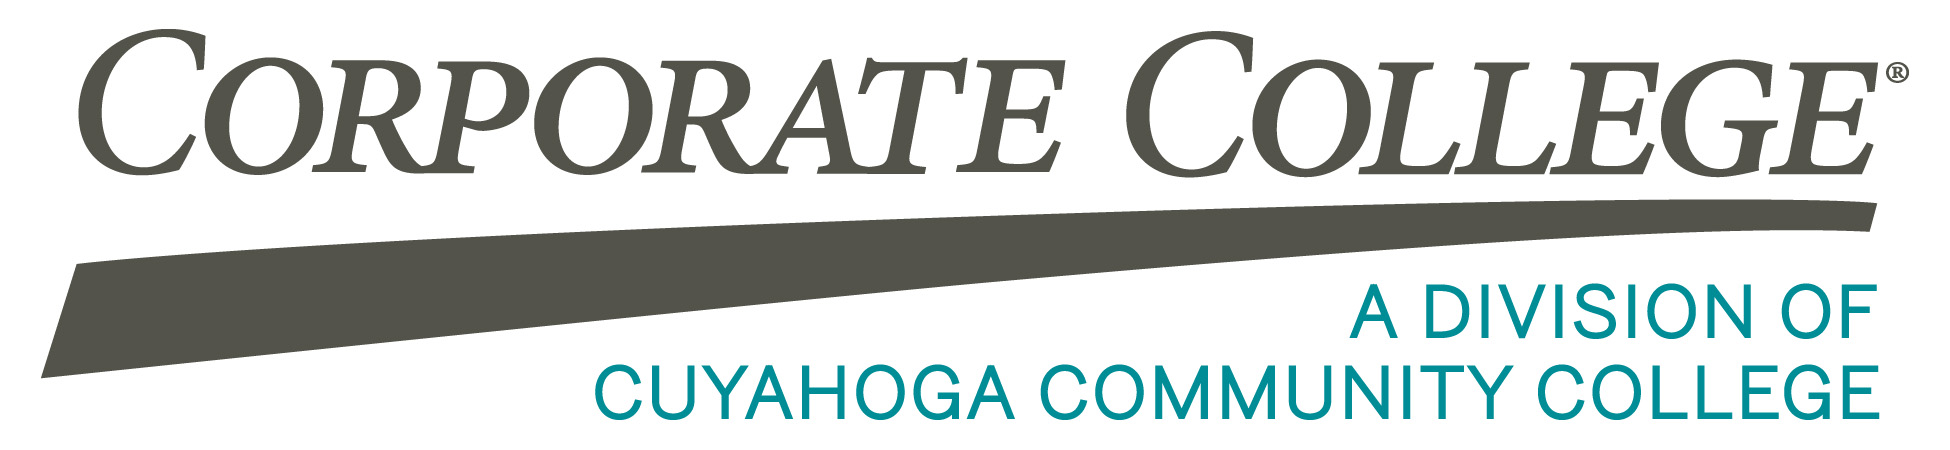 Corporate College Logo